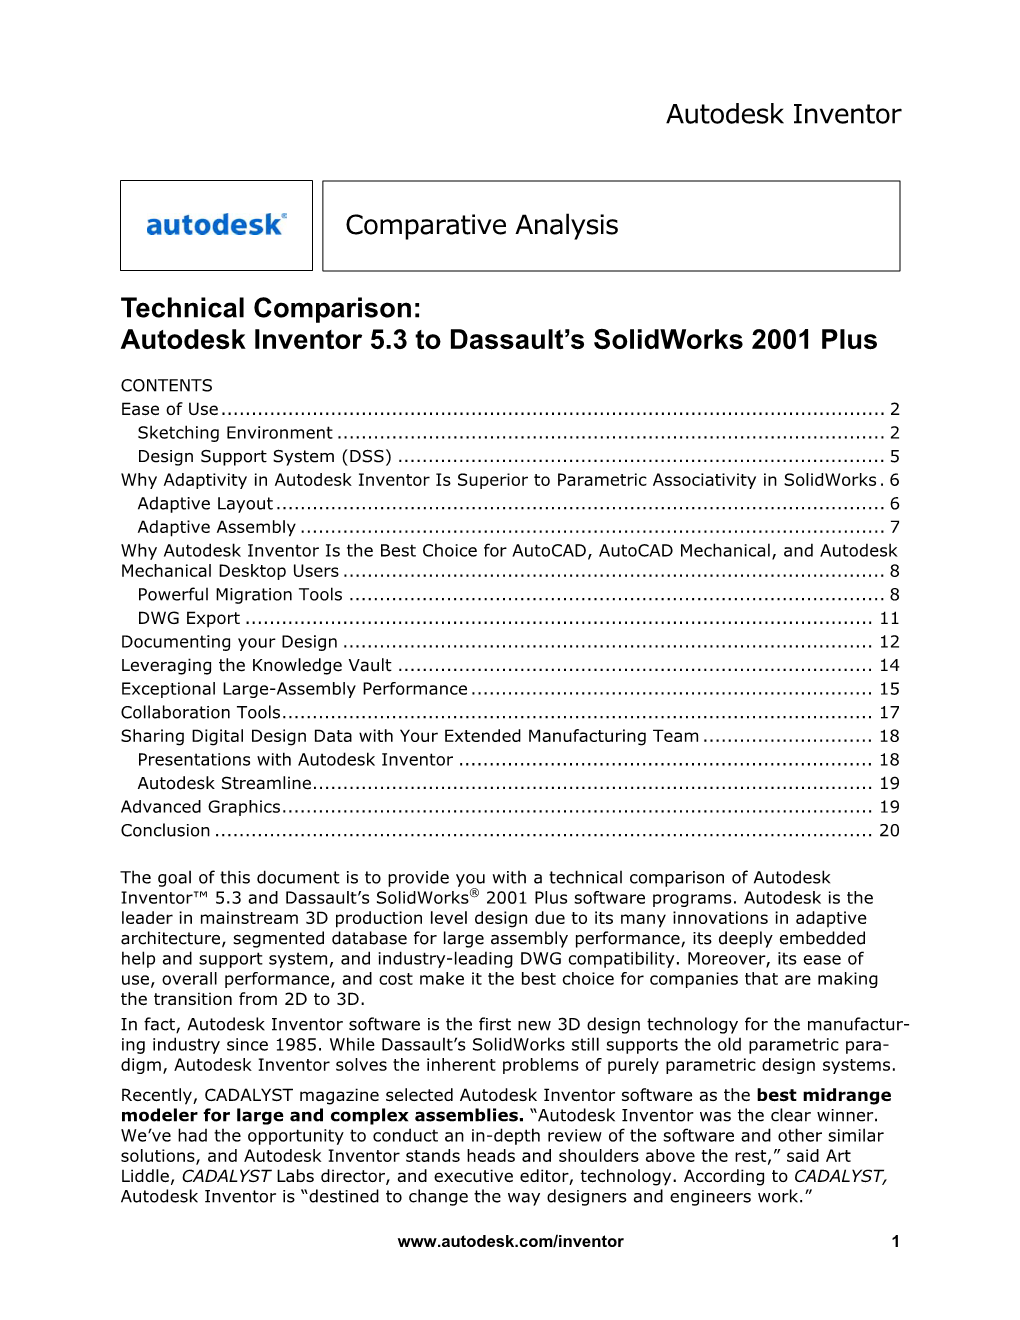 Autodesk Inventor 5.3 to Dassault's Solidworks 2001 Plus